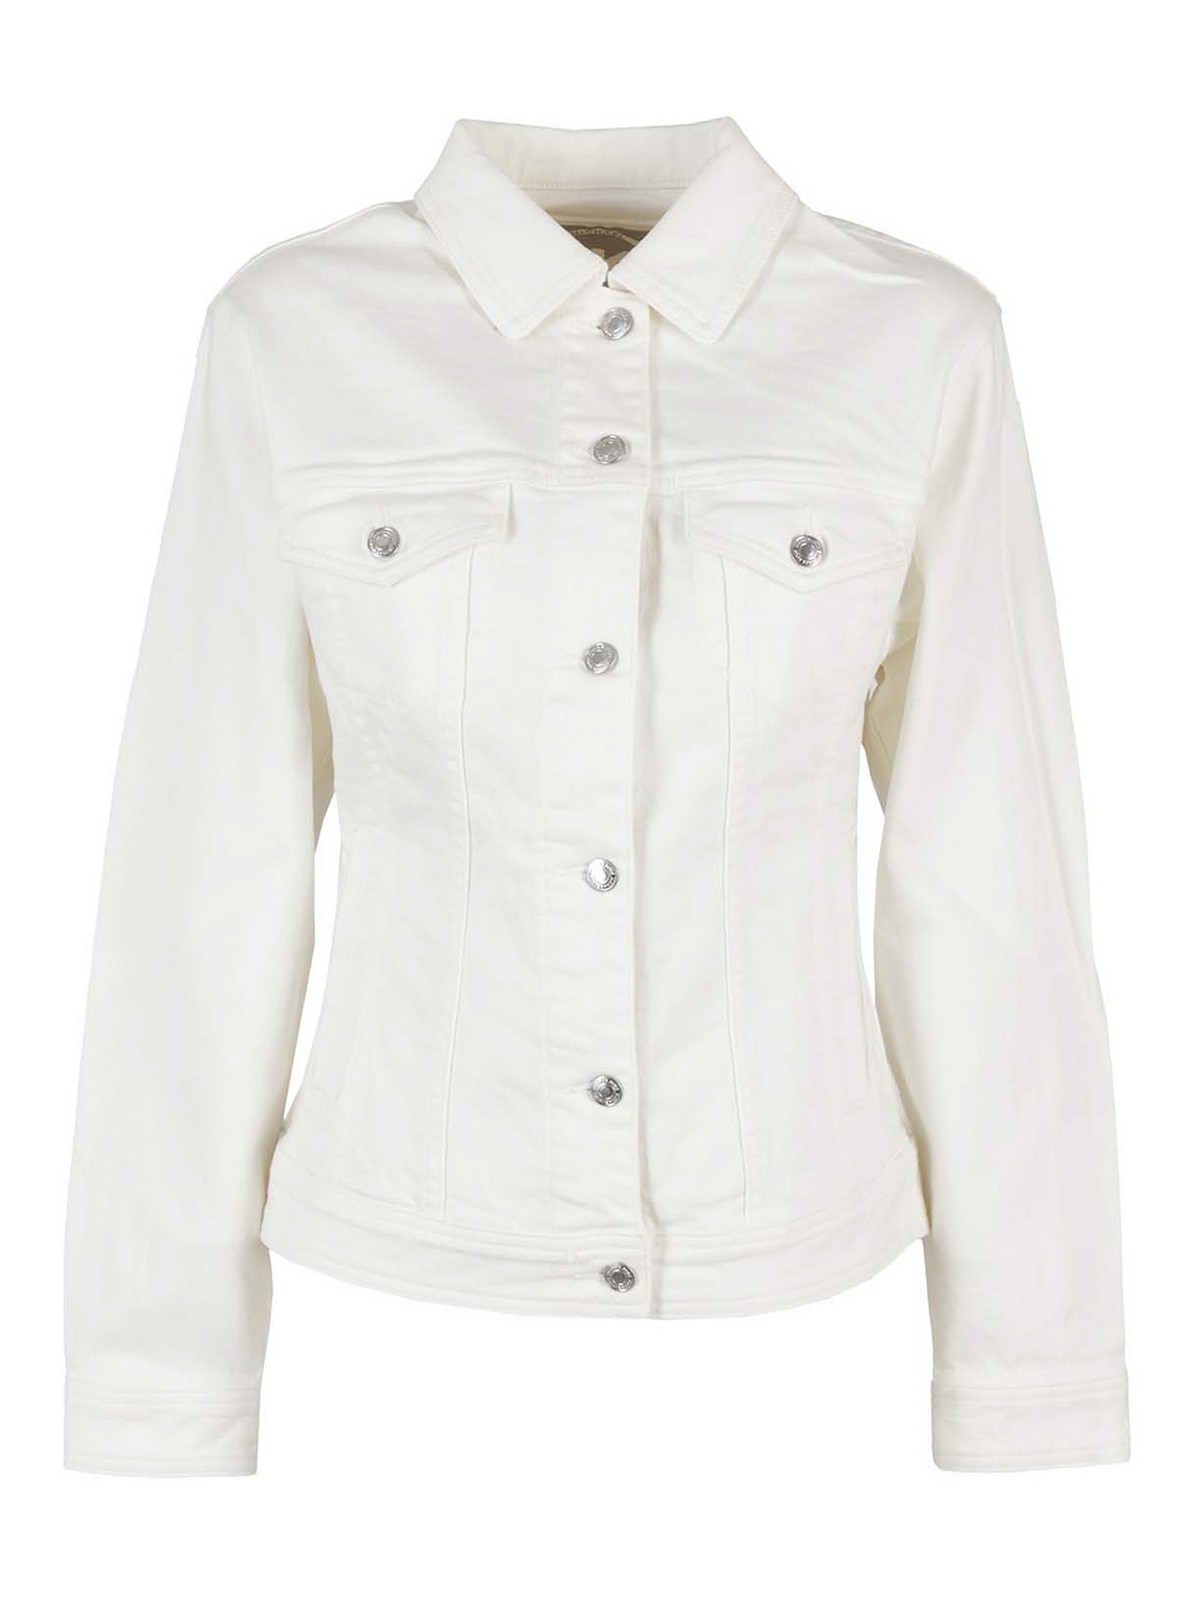 Denim jacket Michael Kors - White denim jacket - MS1100IBUG100 